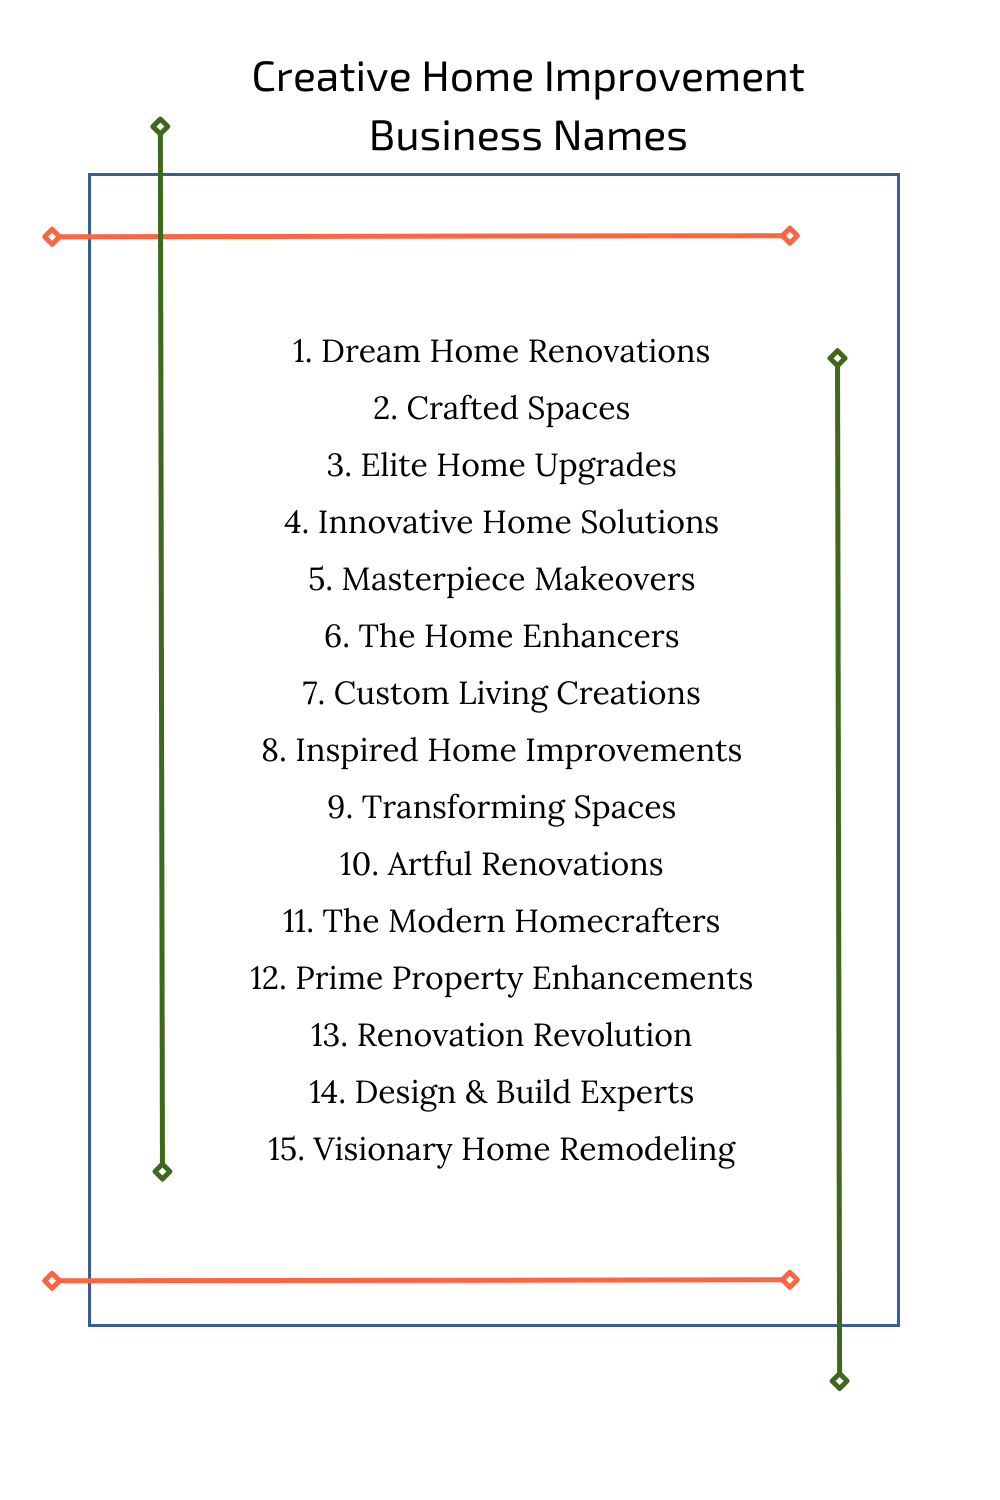 Creative Home Improvement Business Names